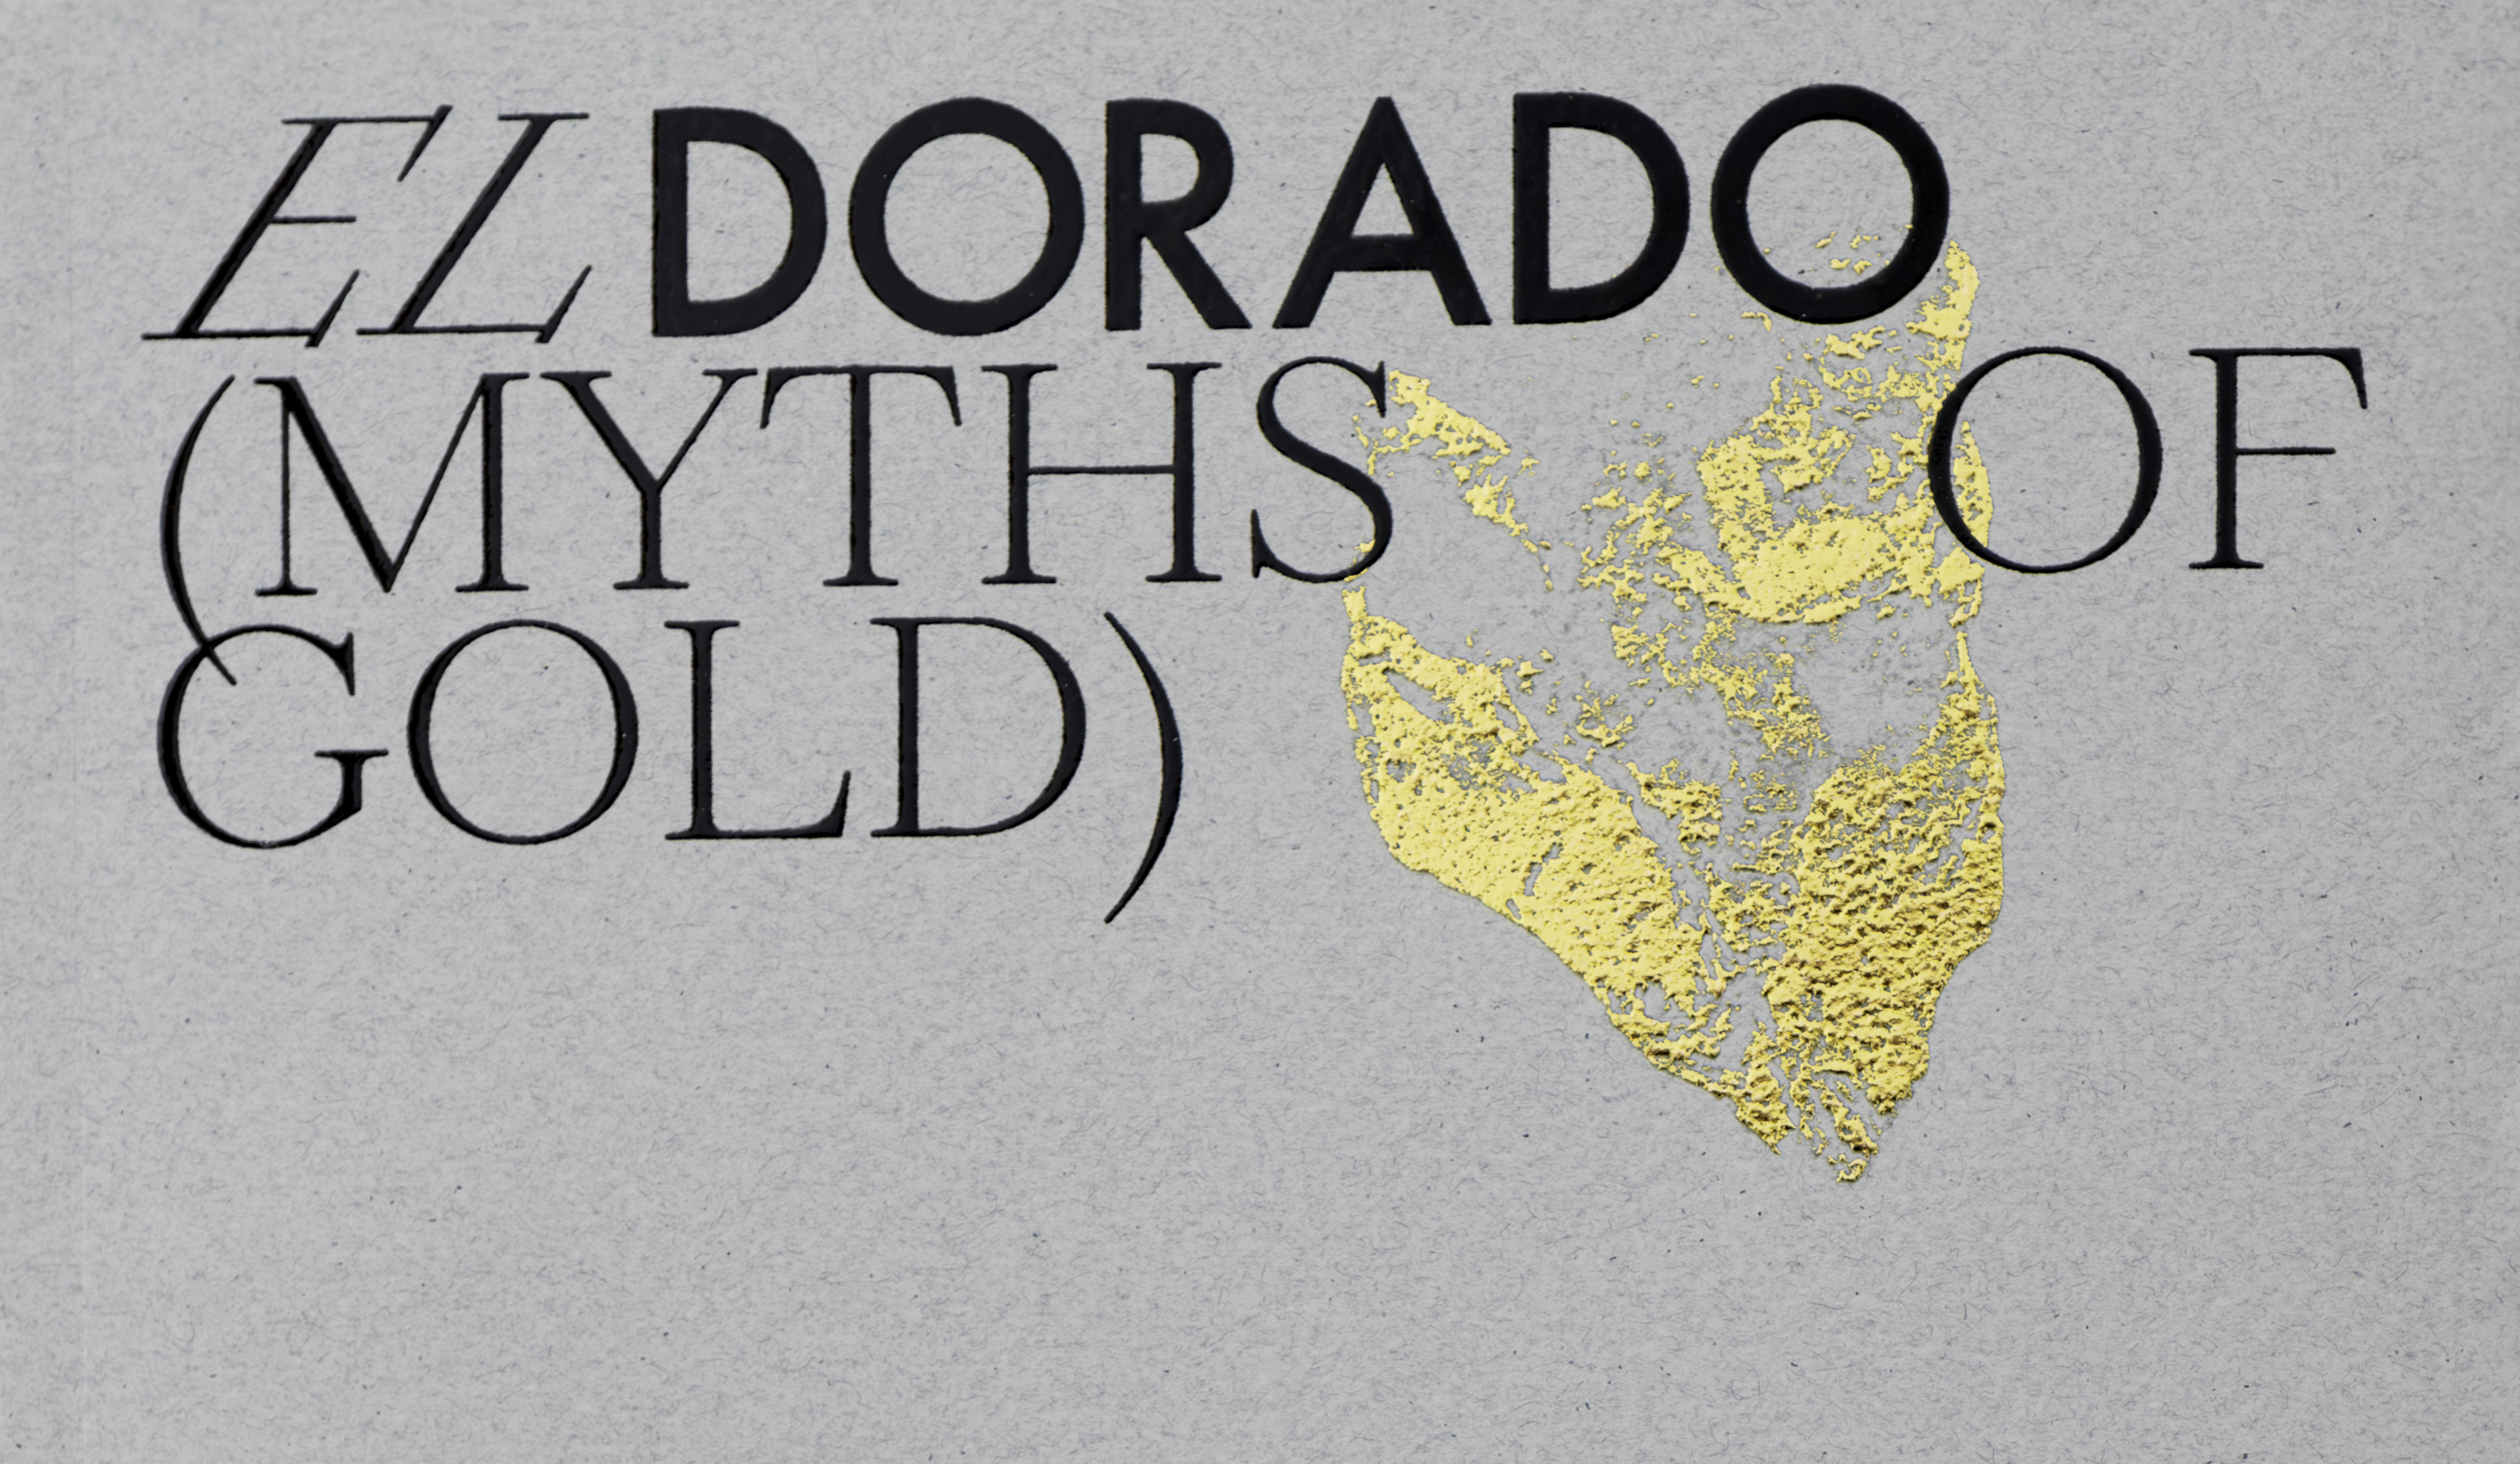 El Dorado: Myths of Gold